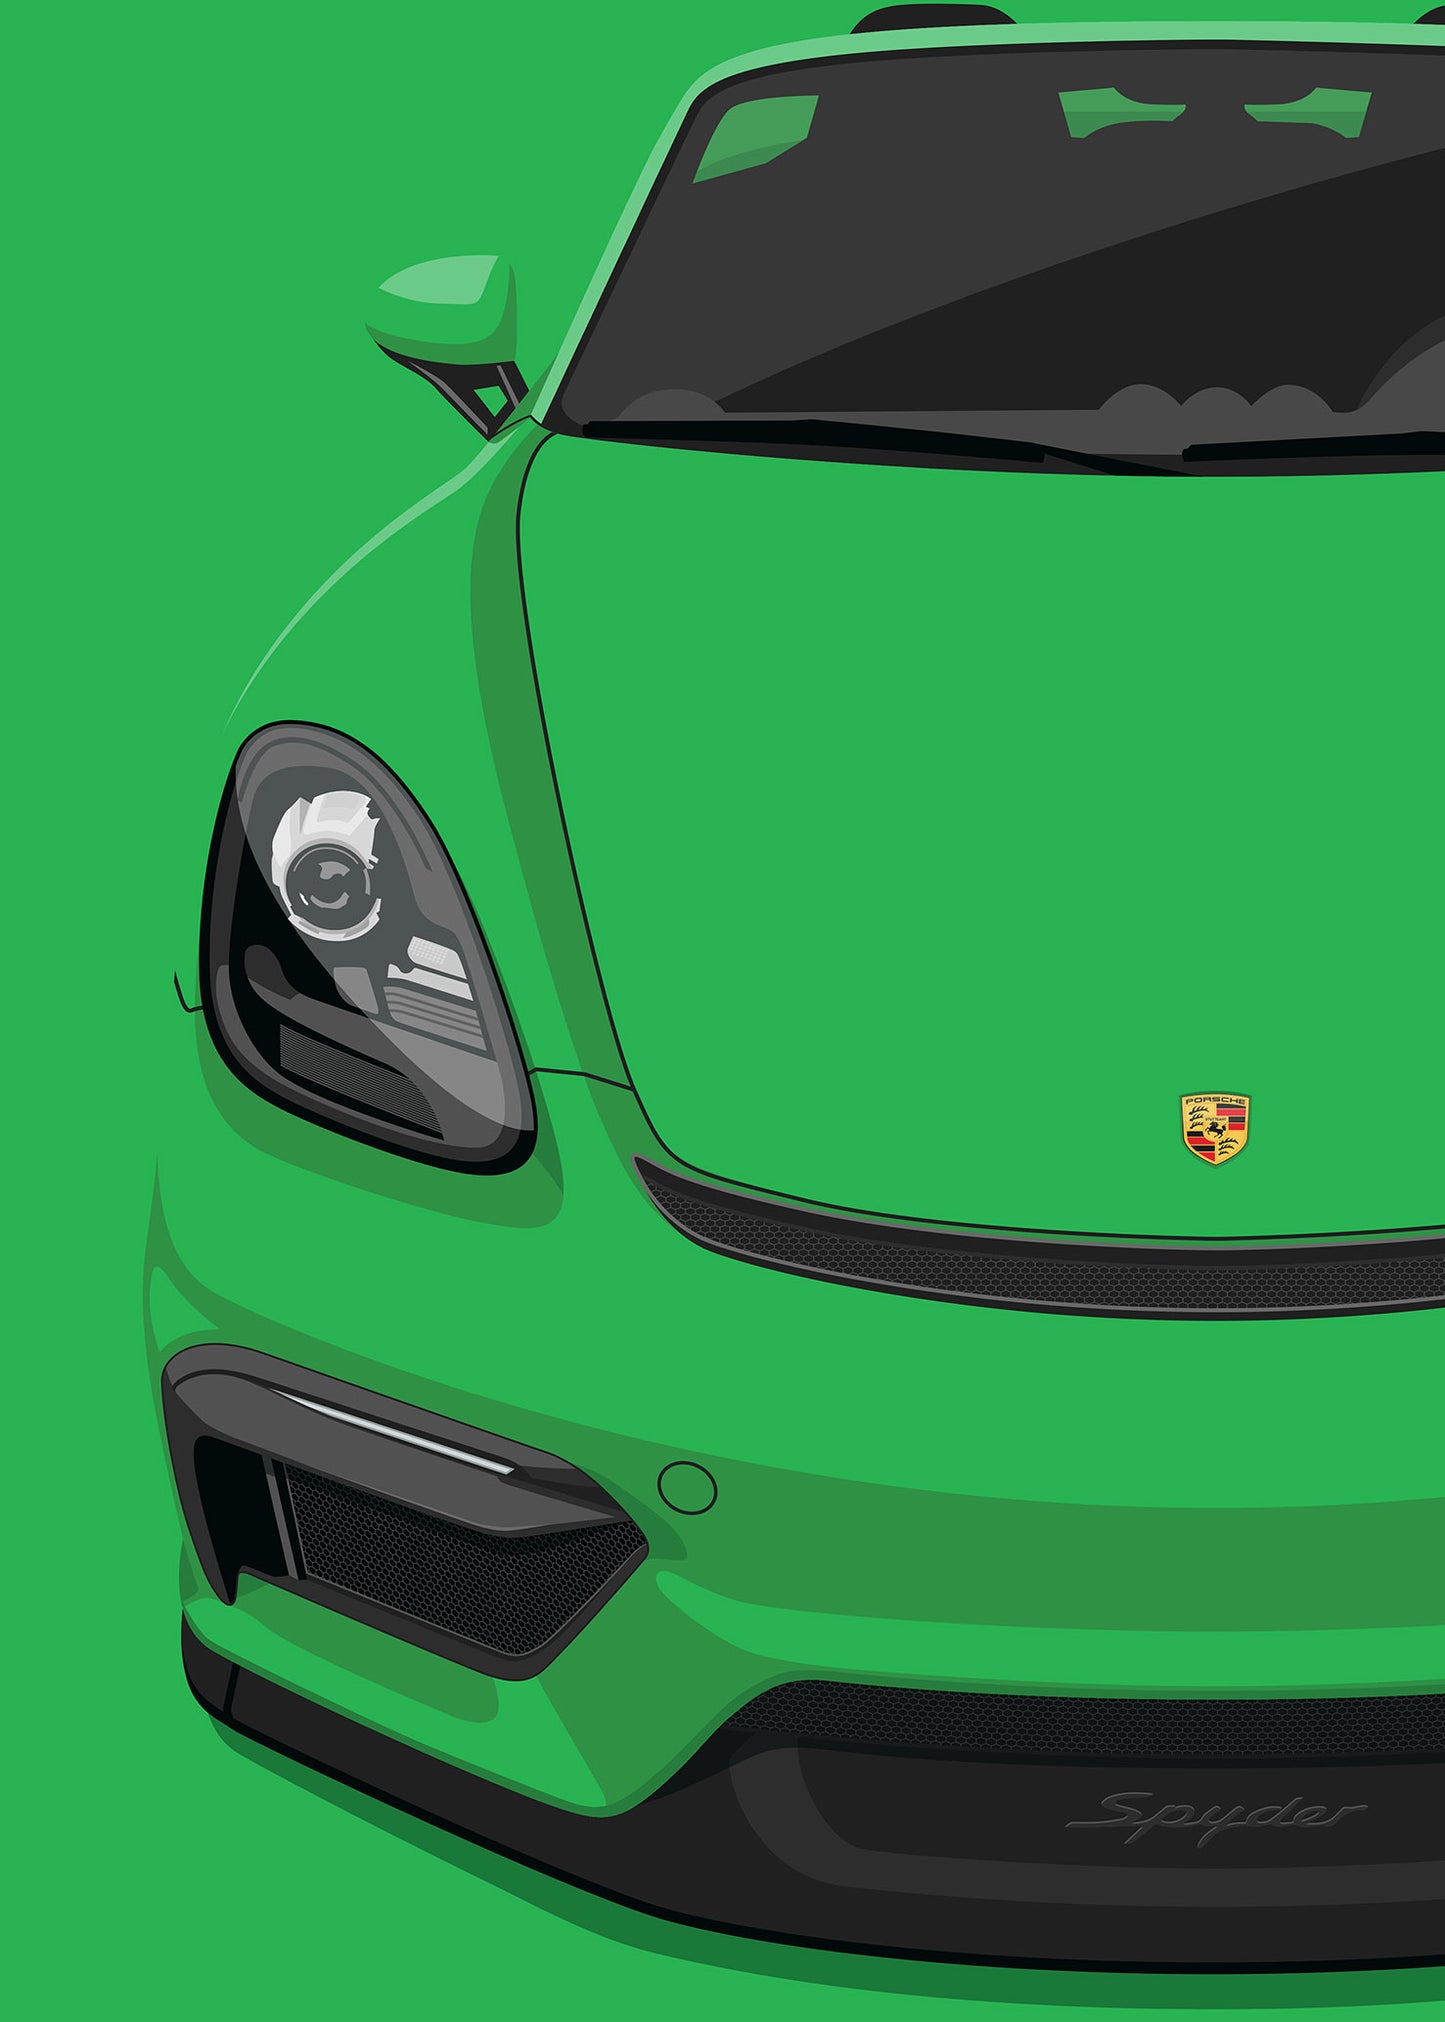 2020 Porsche 718 Spyder (982) - Python Green - poster print